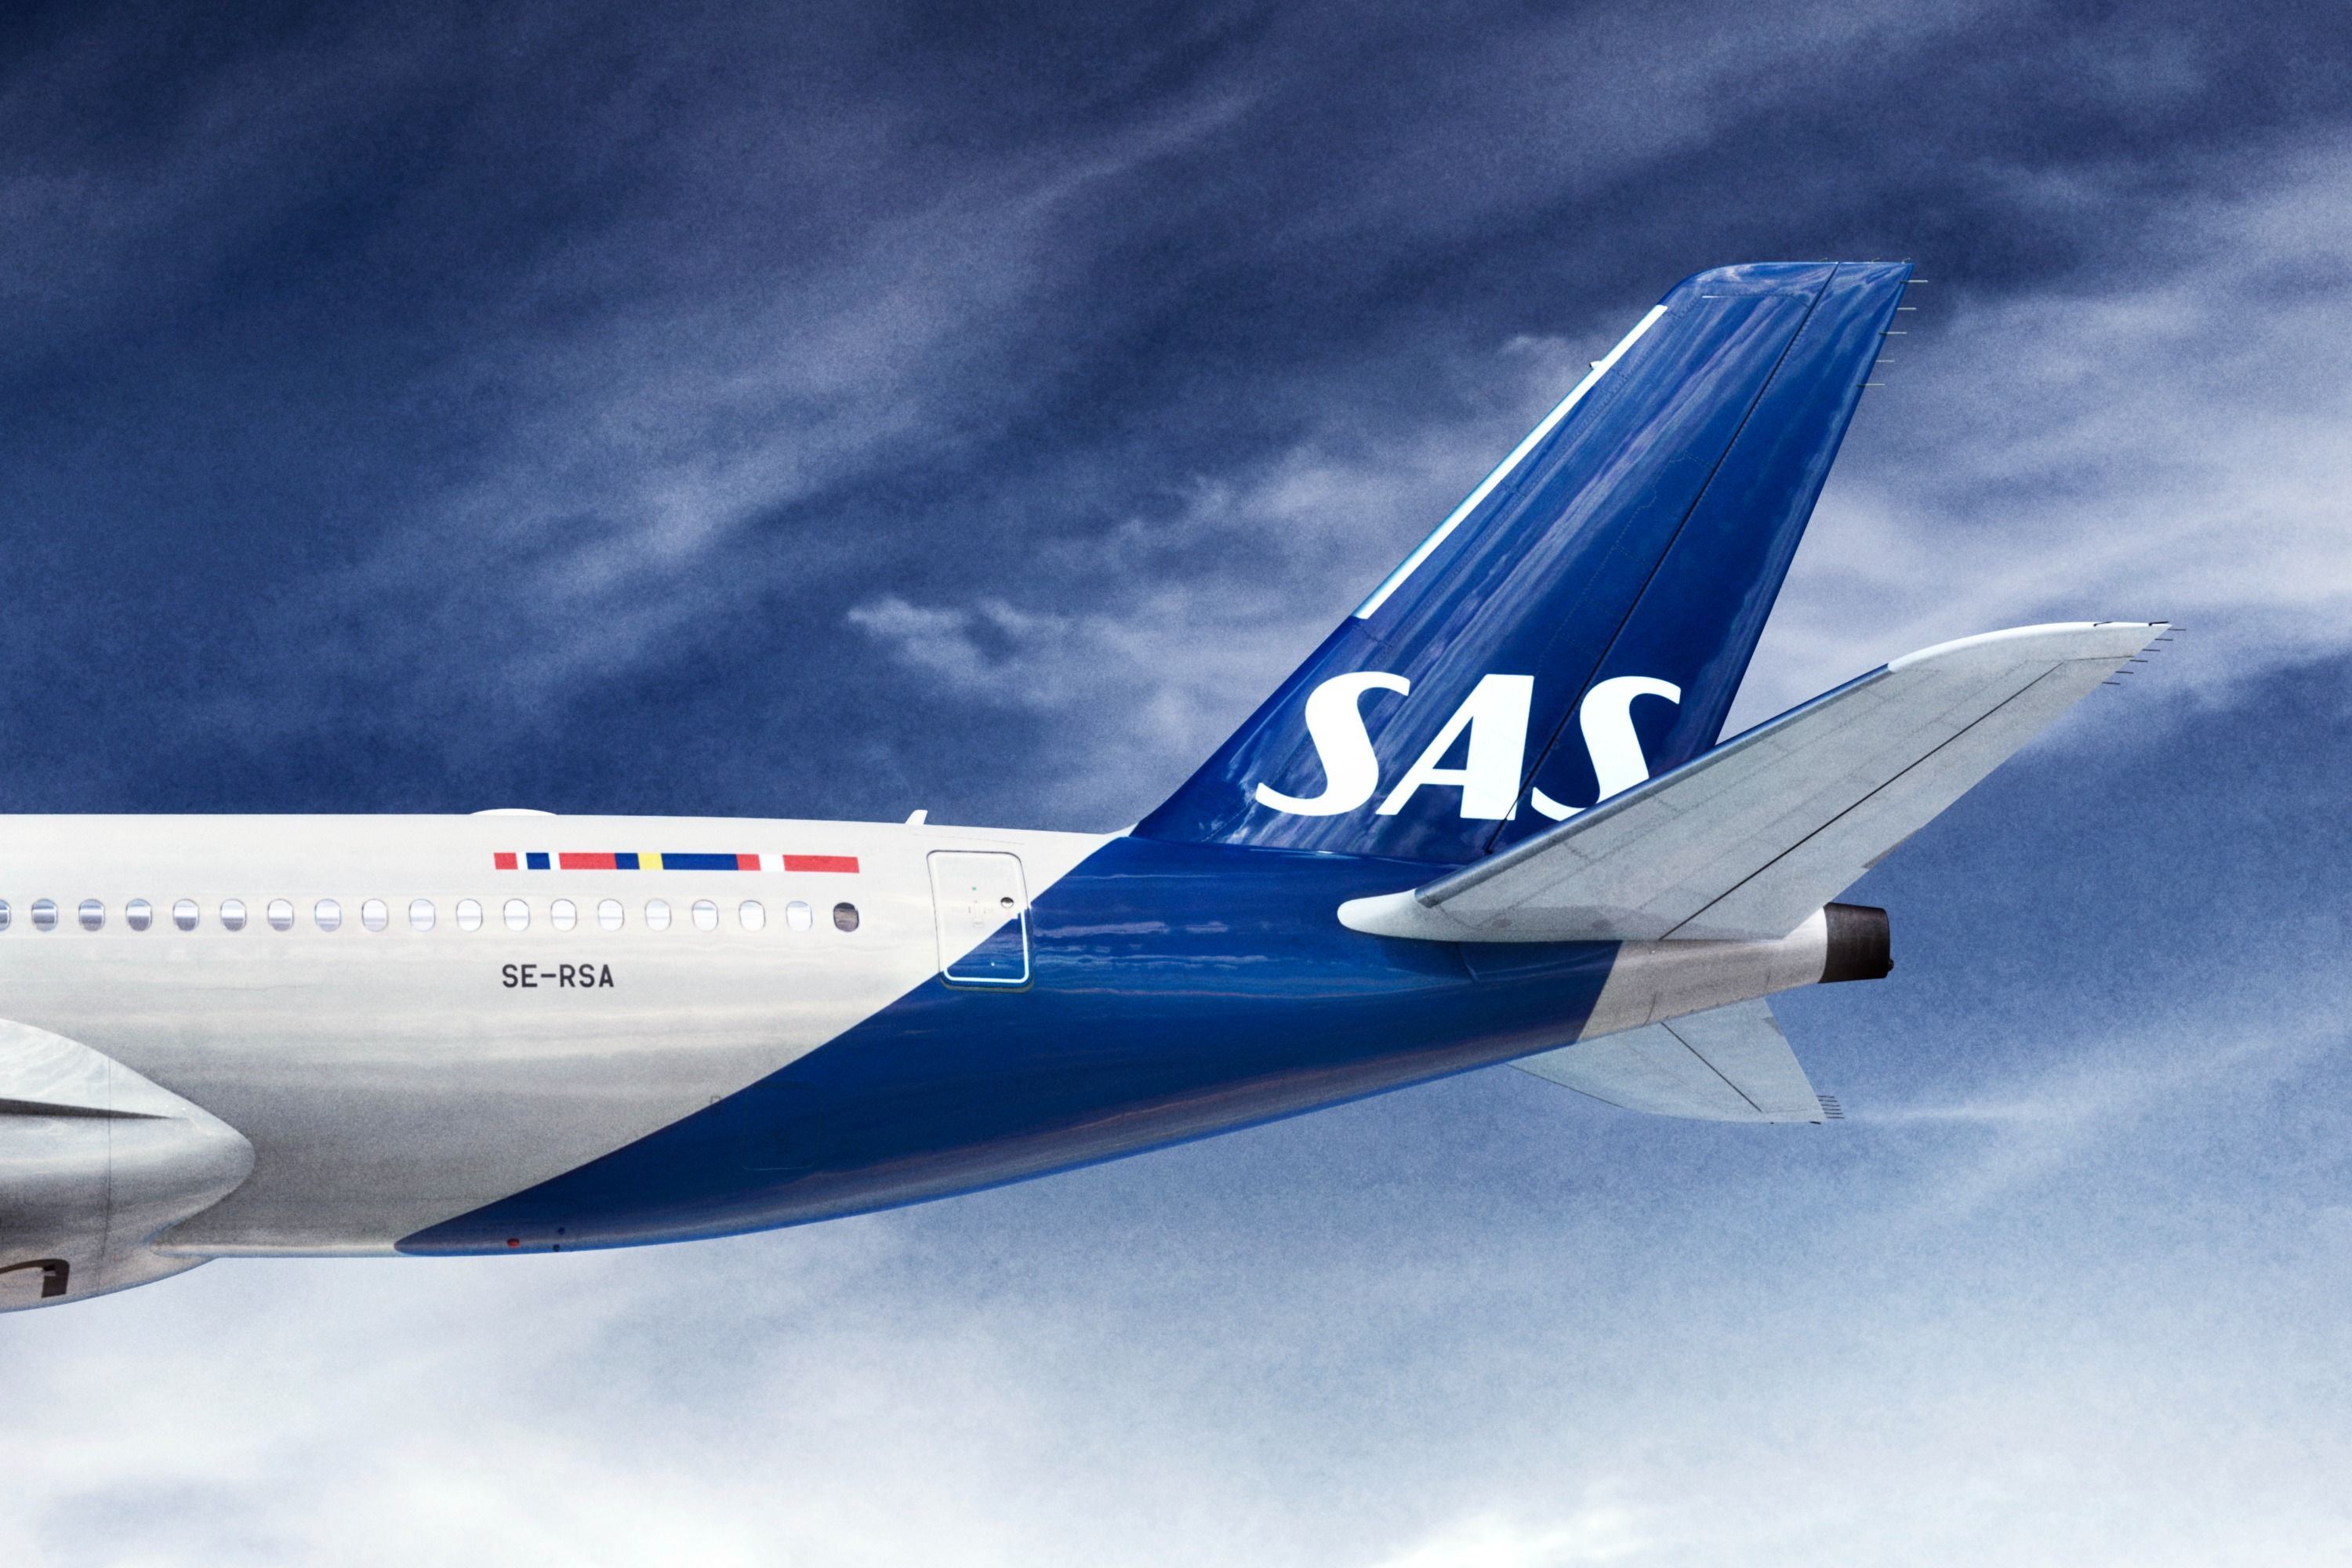 SAS aircraft tail